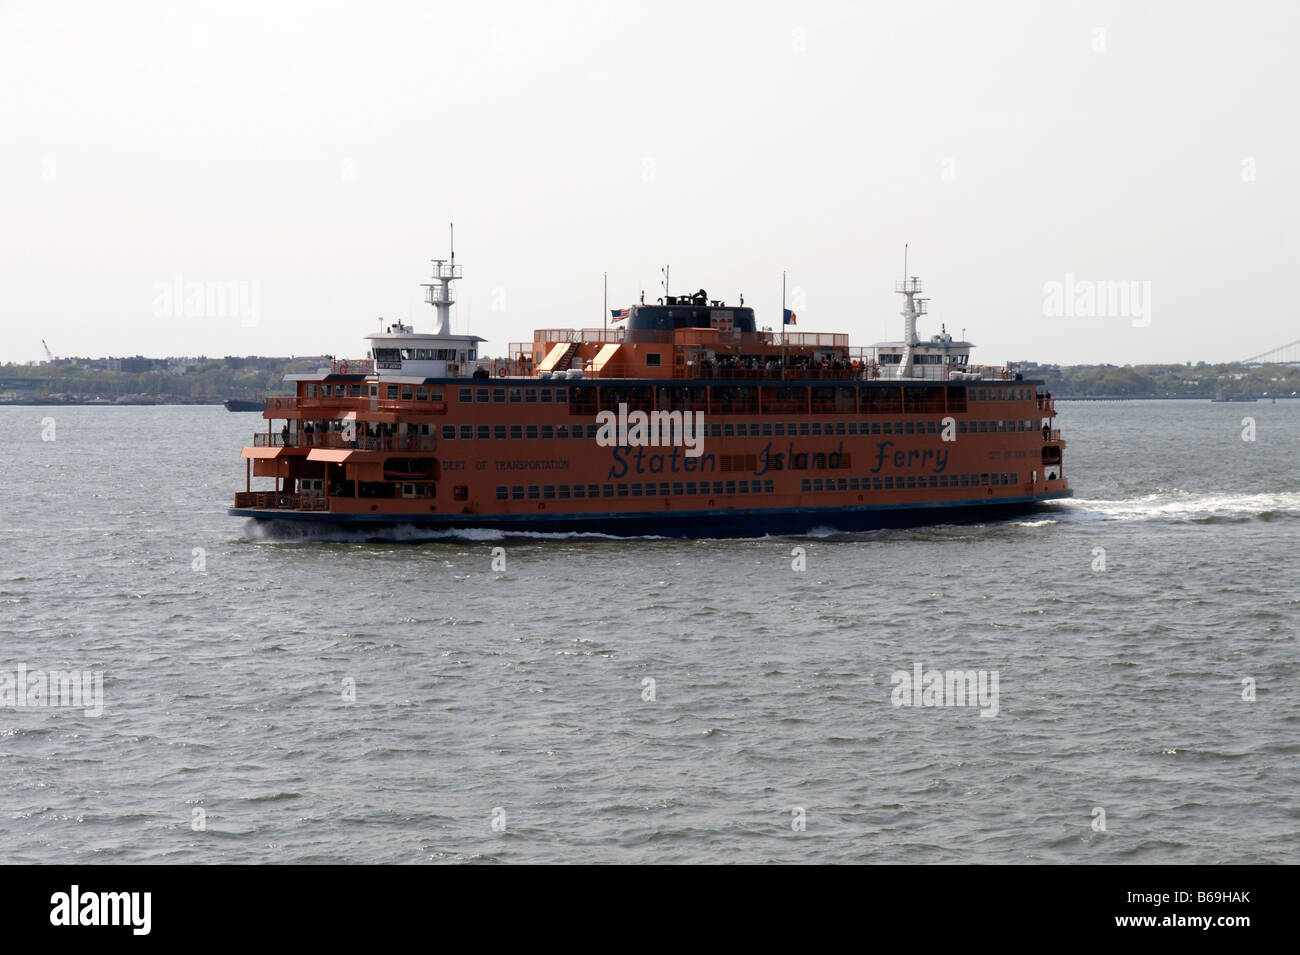 The Staten Island Ferry in Upper New York Bay, New York Stock Photo